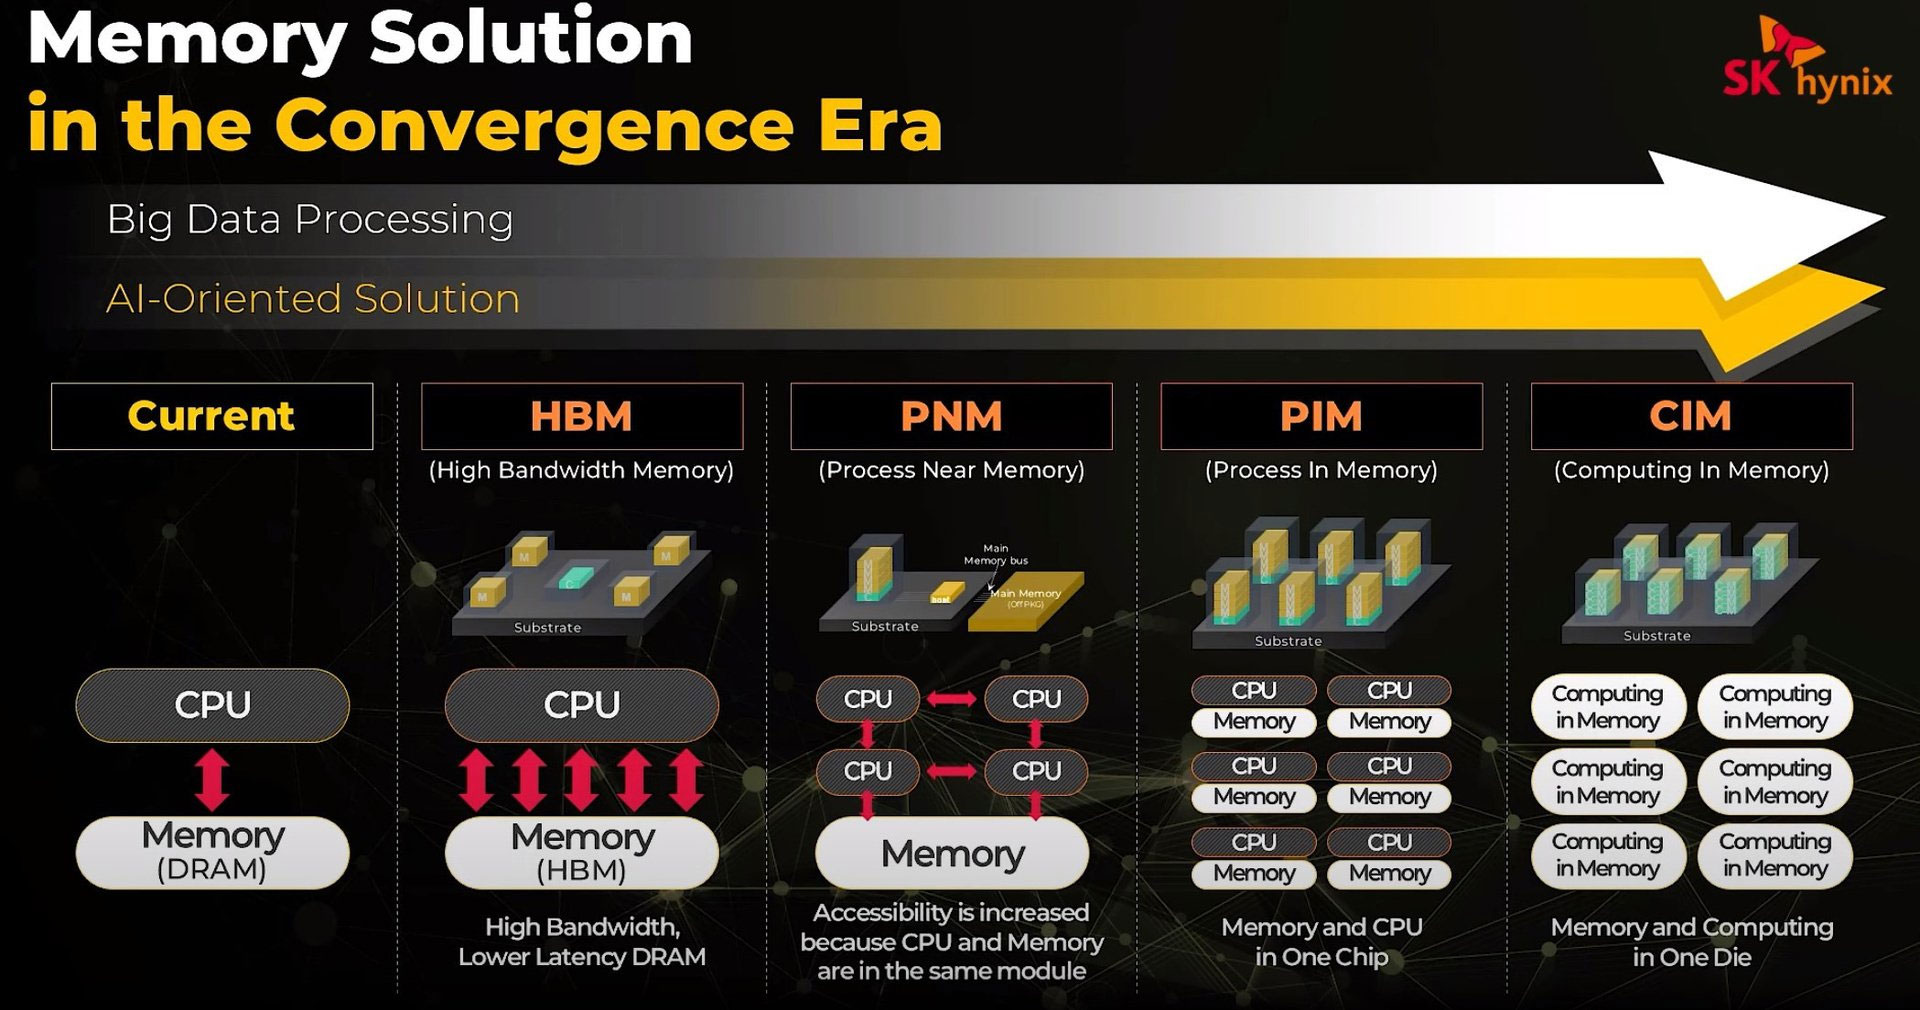 SK hynix CEO predicts "convergence of memory & logic" - RAM - News -  HEXUS.net